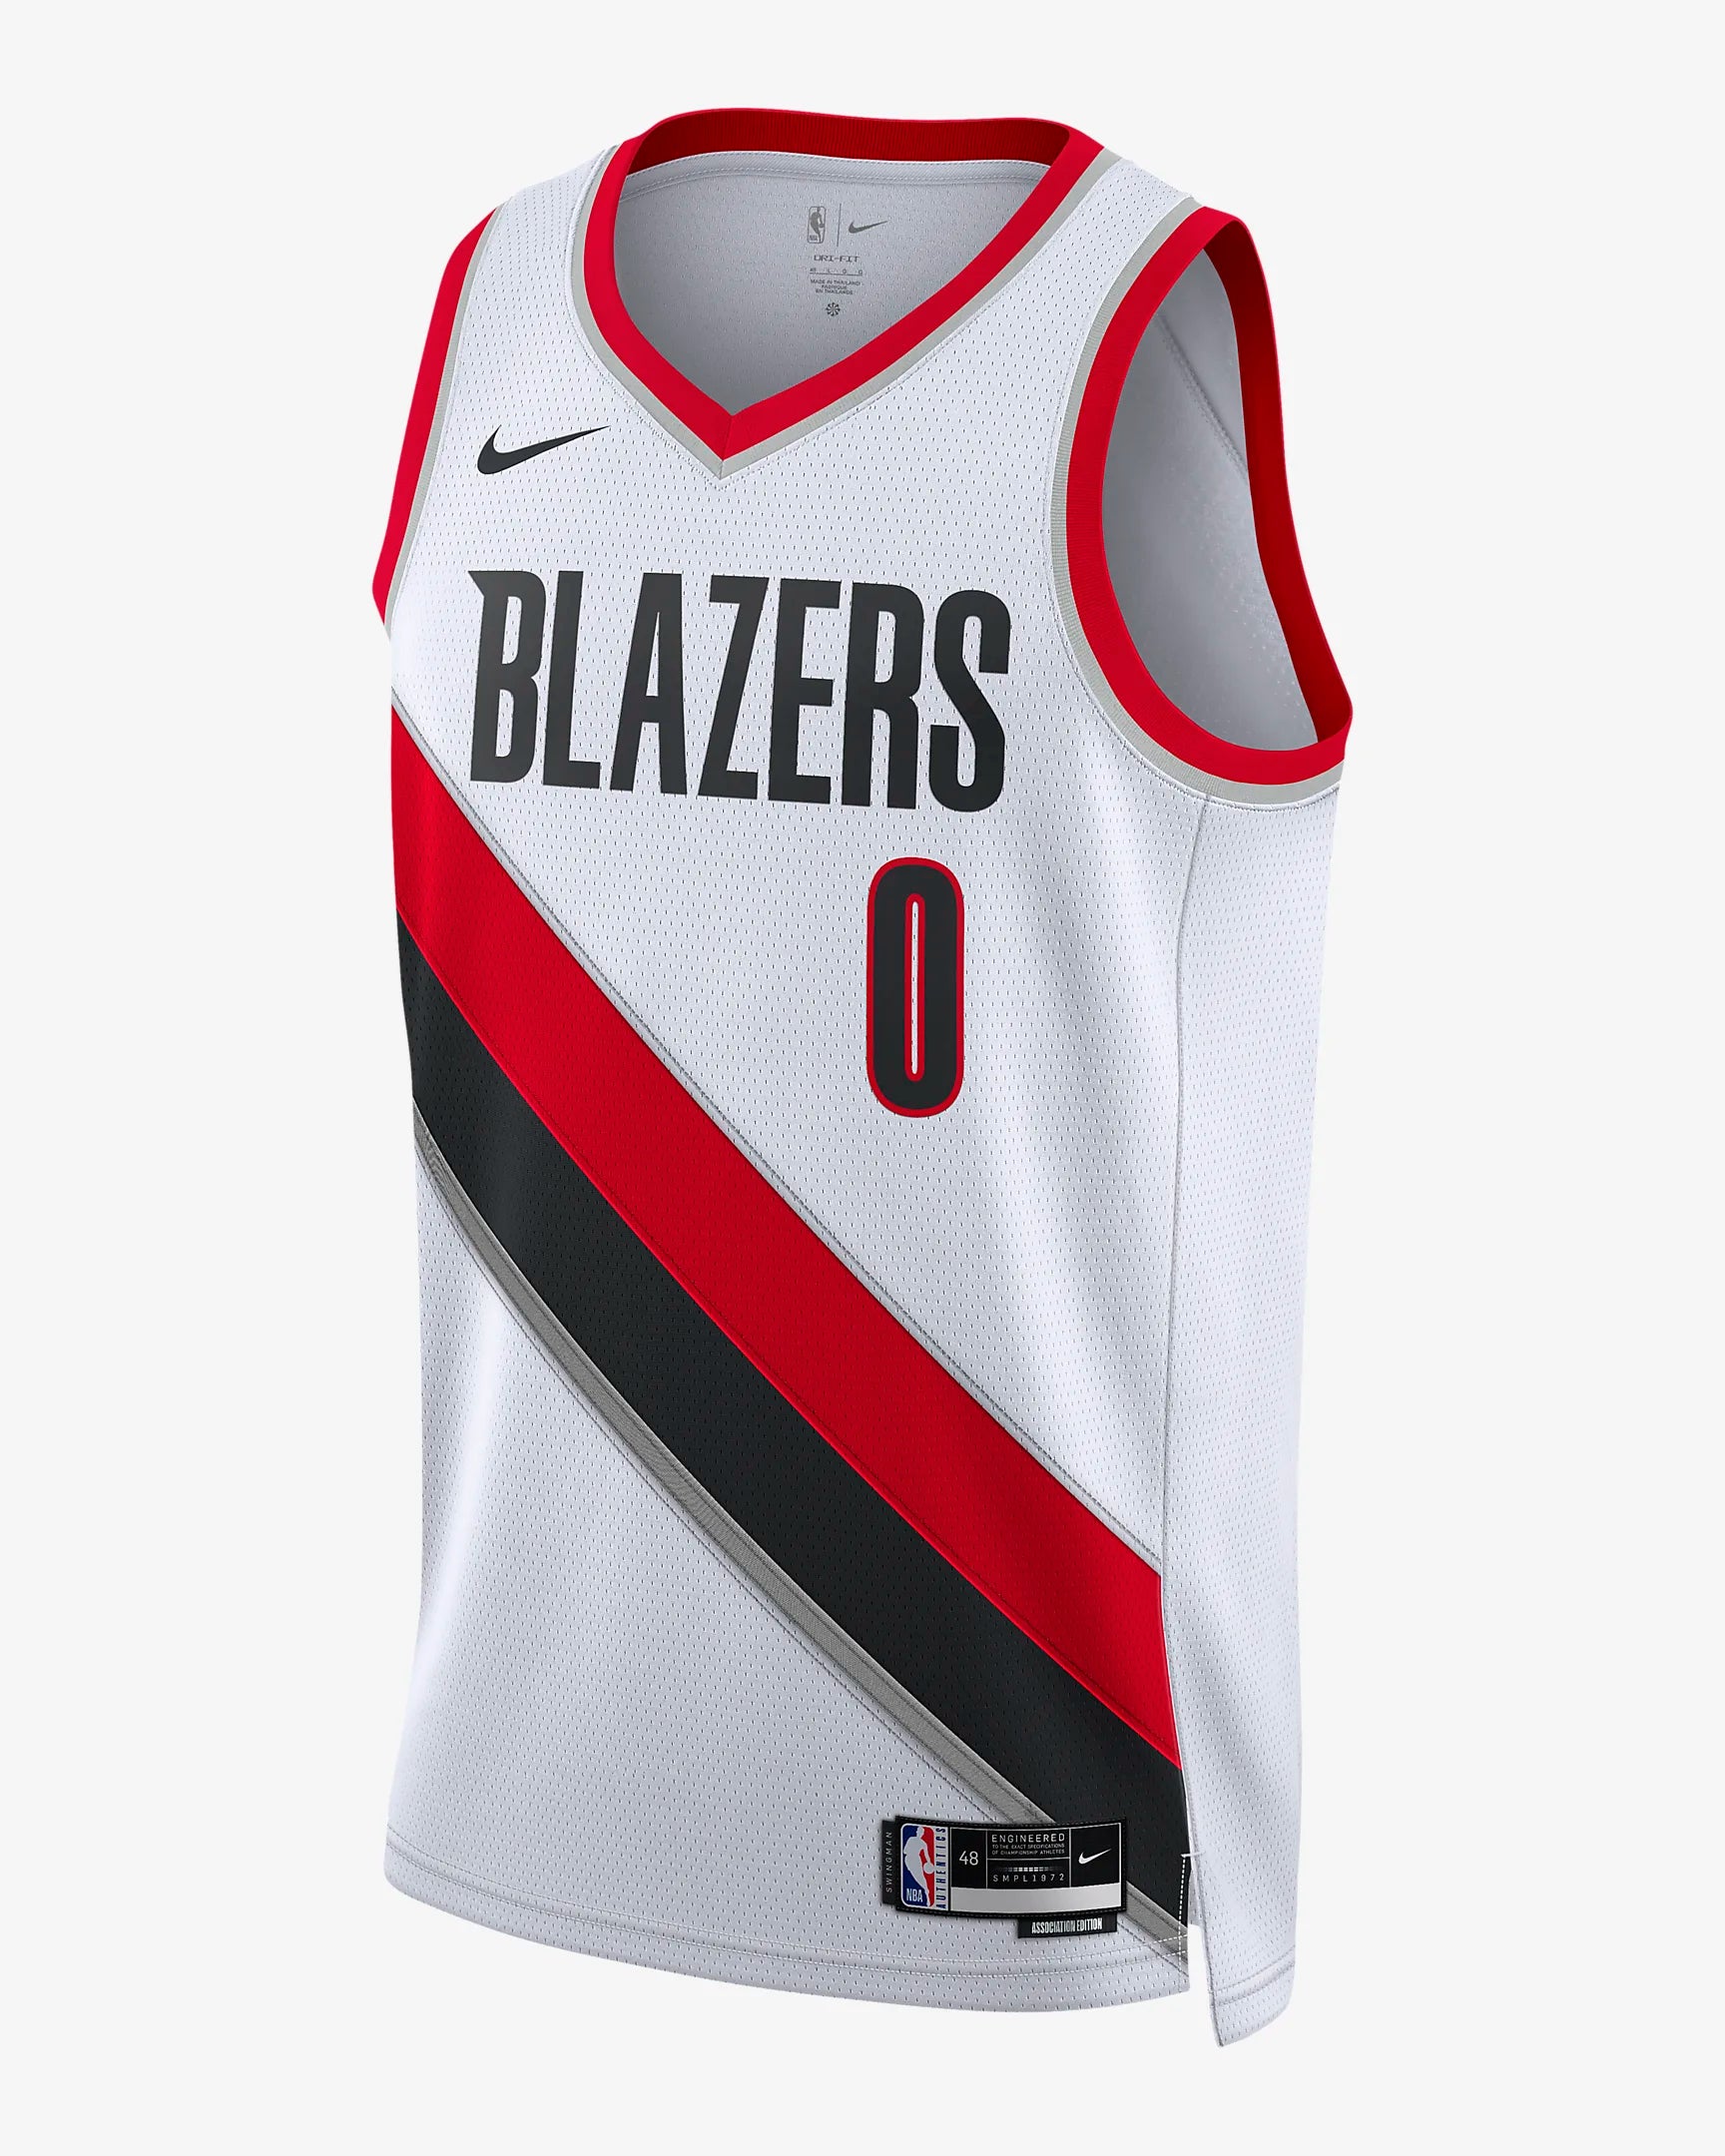 Put your brand on a Blazer: NBA approves ads on Nike-designed jerseys -  Portland Business Journal